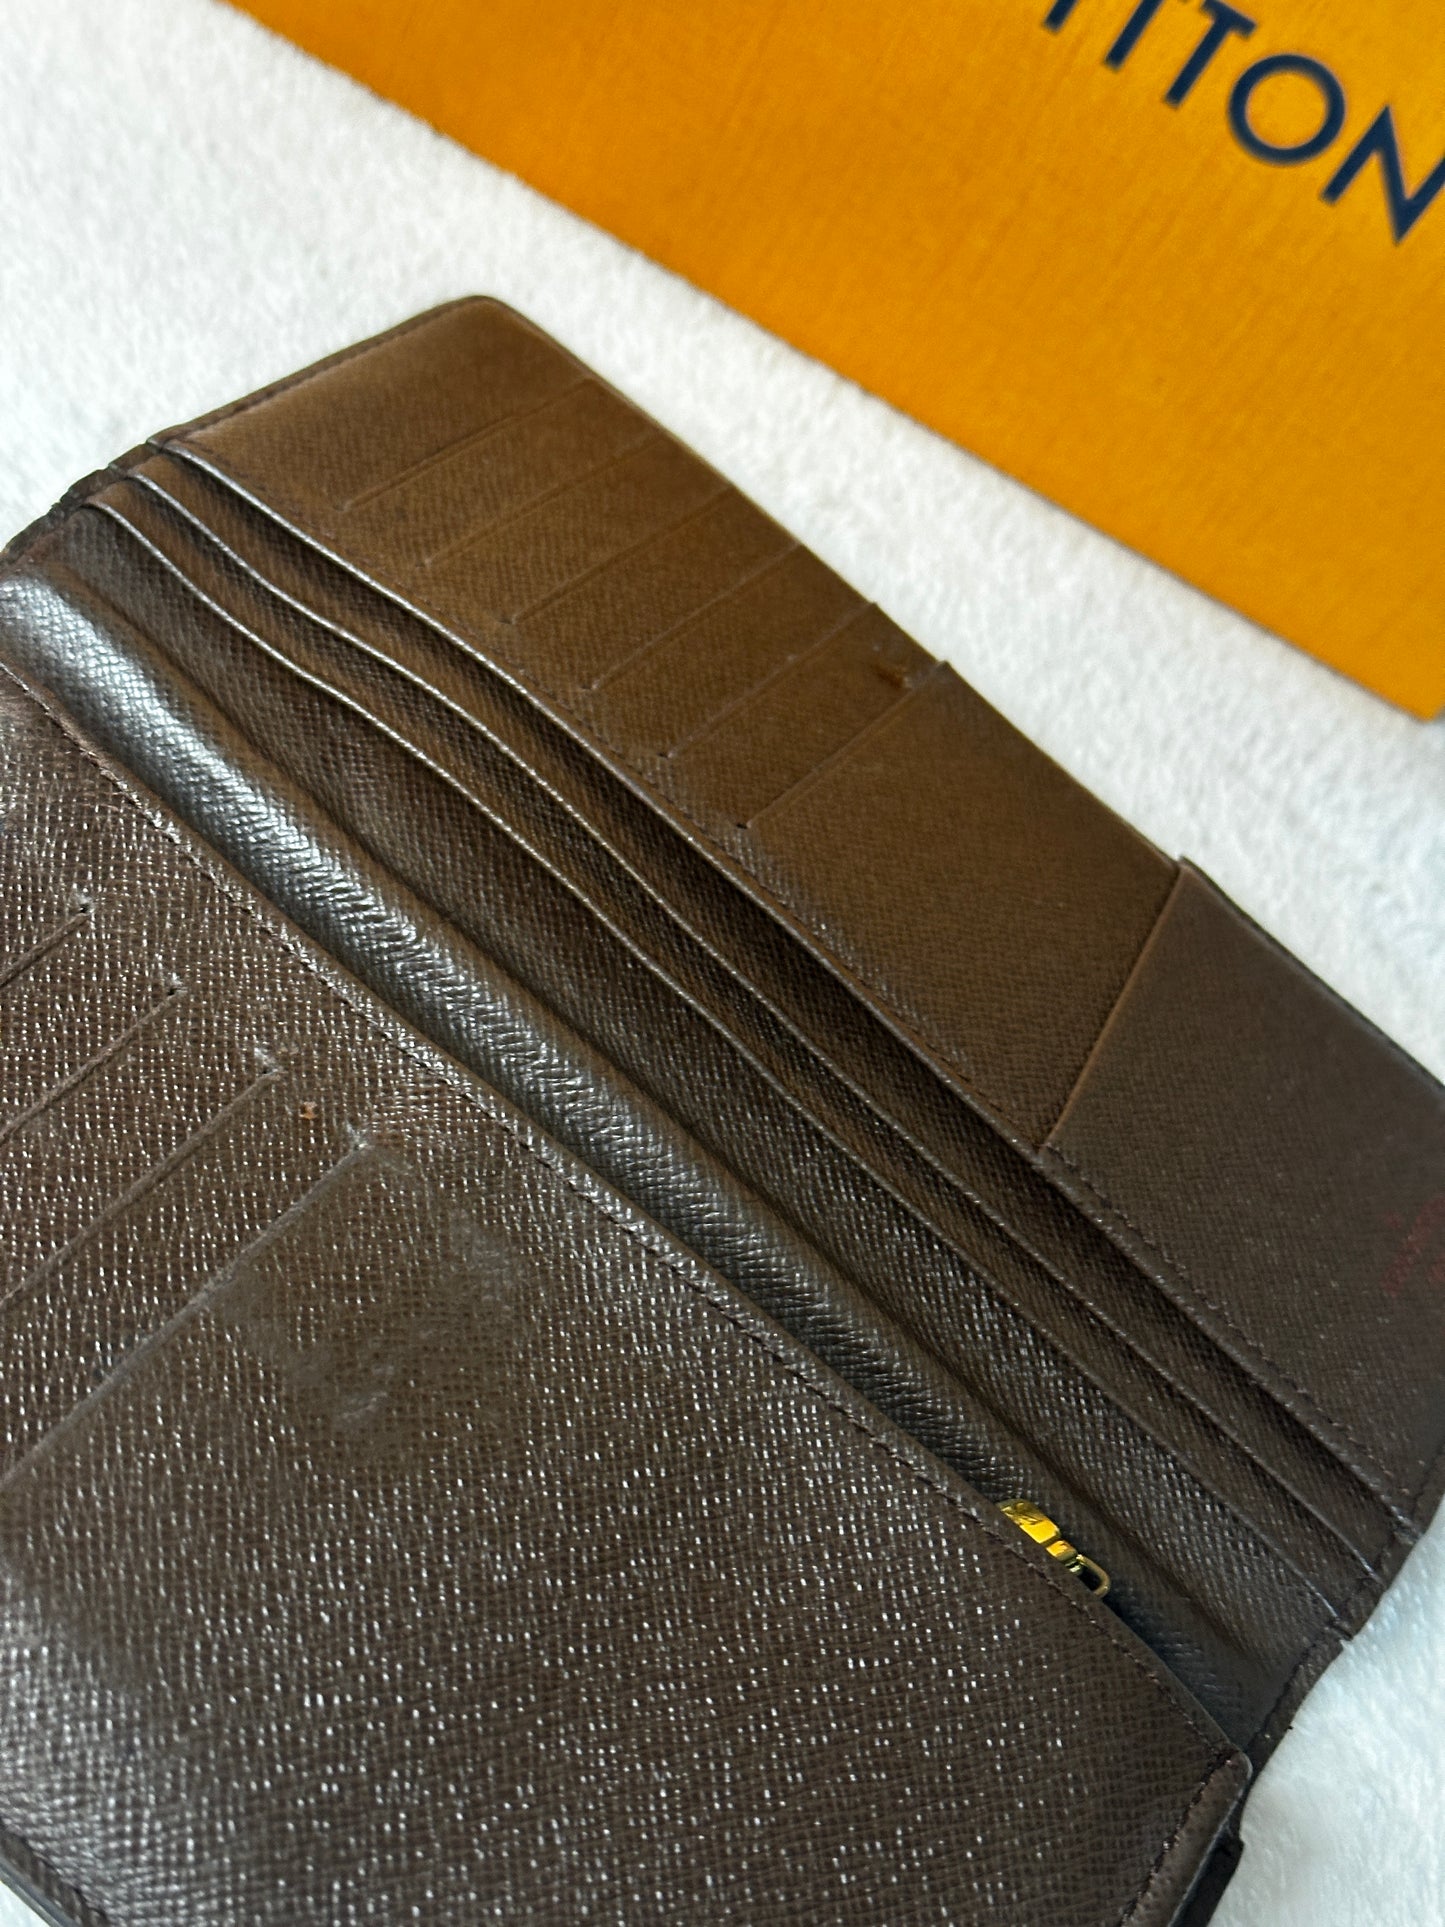 Authentic Louis Vuitton Damier Ebene Porte Brother Checkbook Wallet